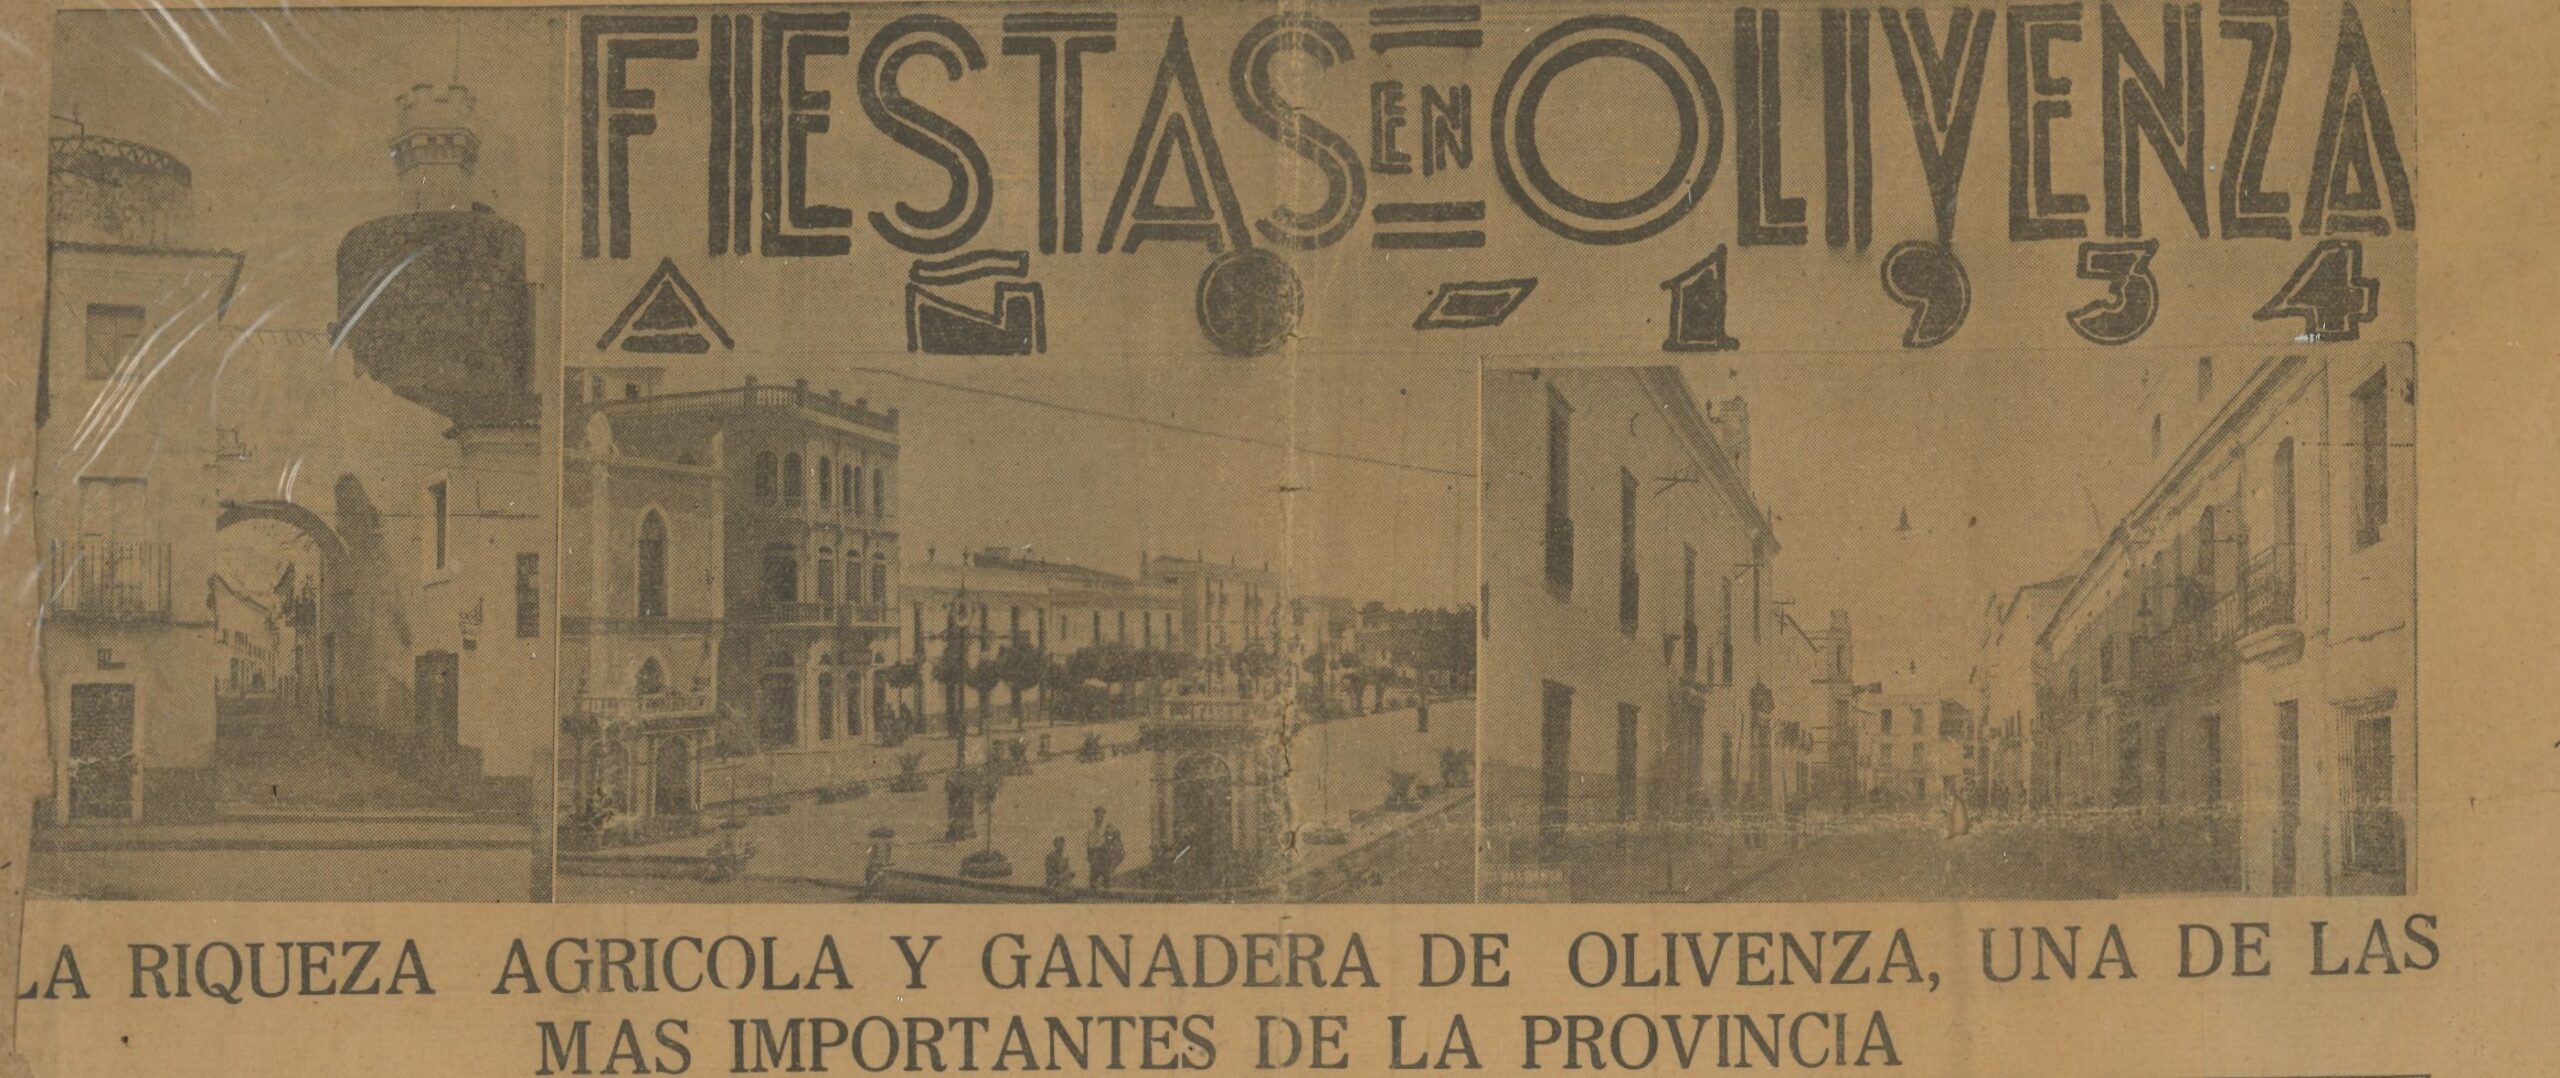 Fiestas en Olivenza 1934 scaled